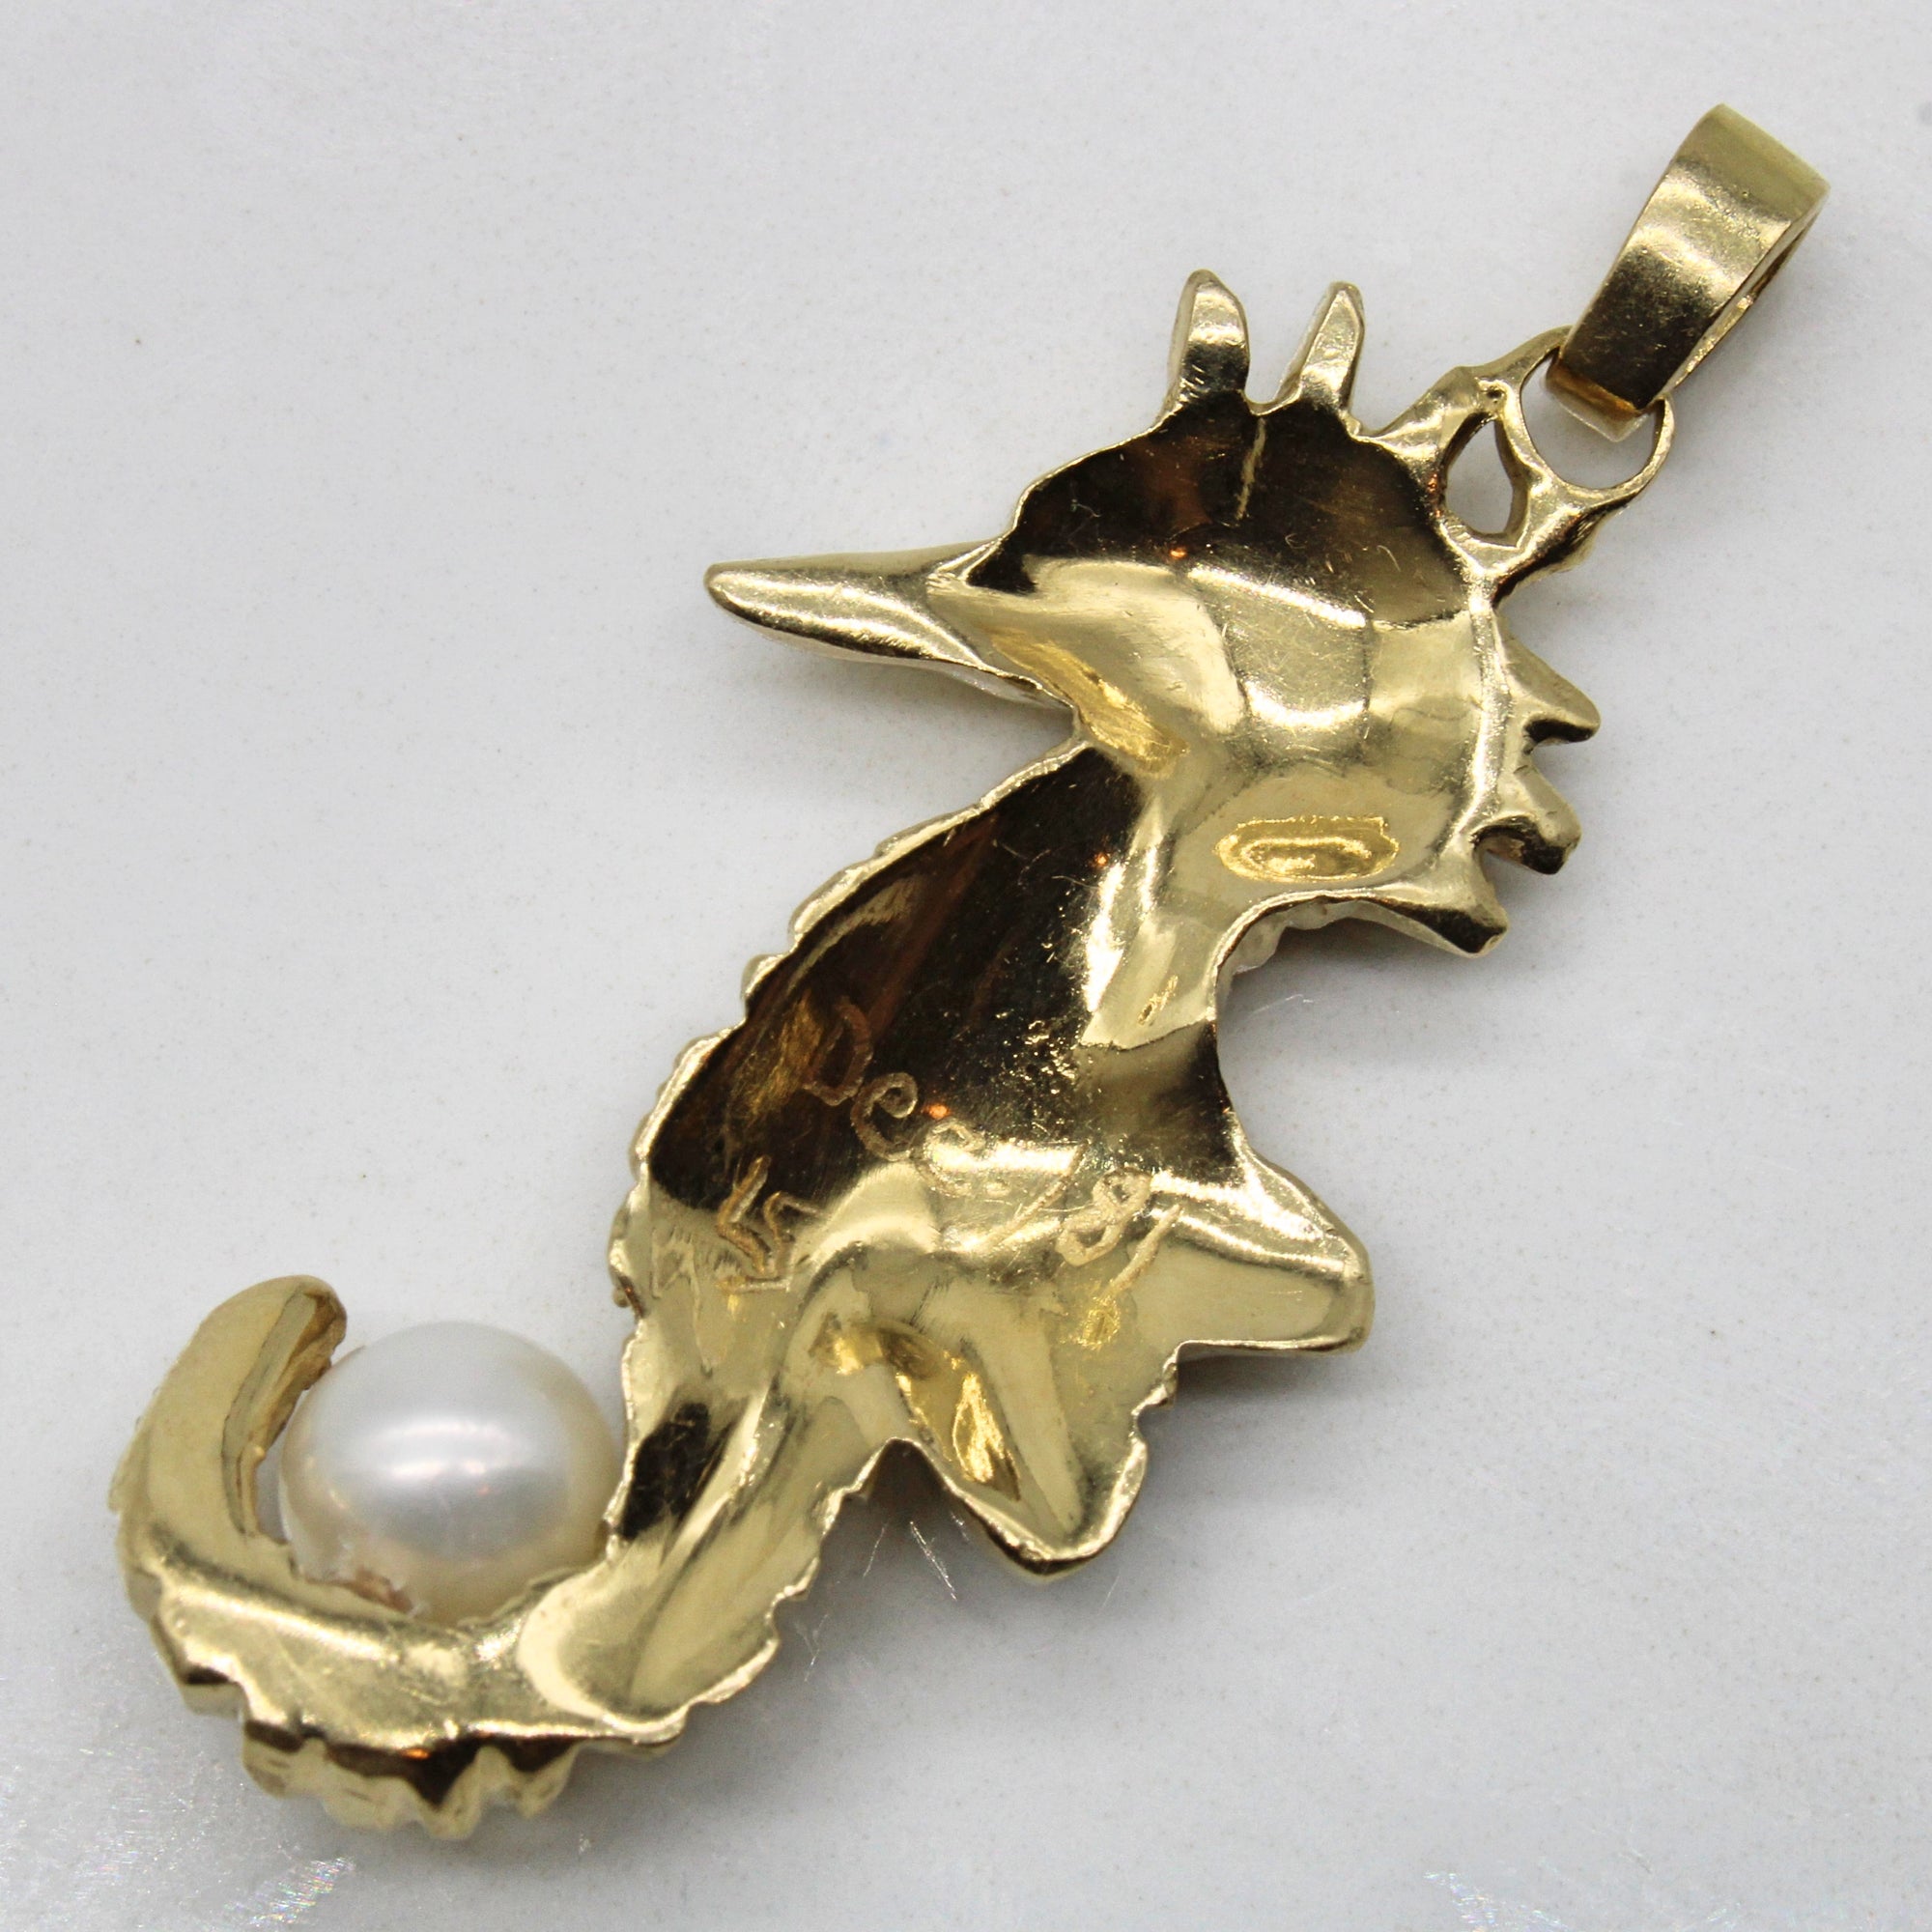 Pearl Seahorse Pendant |